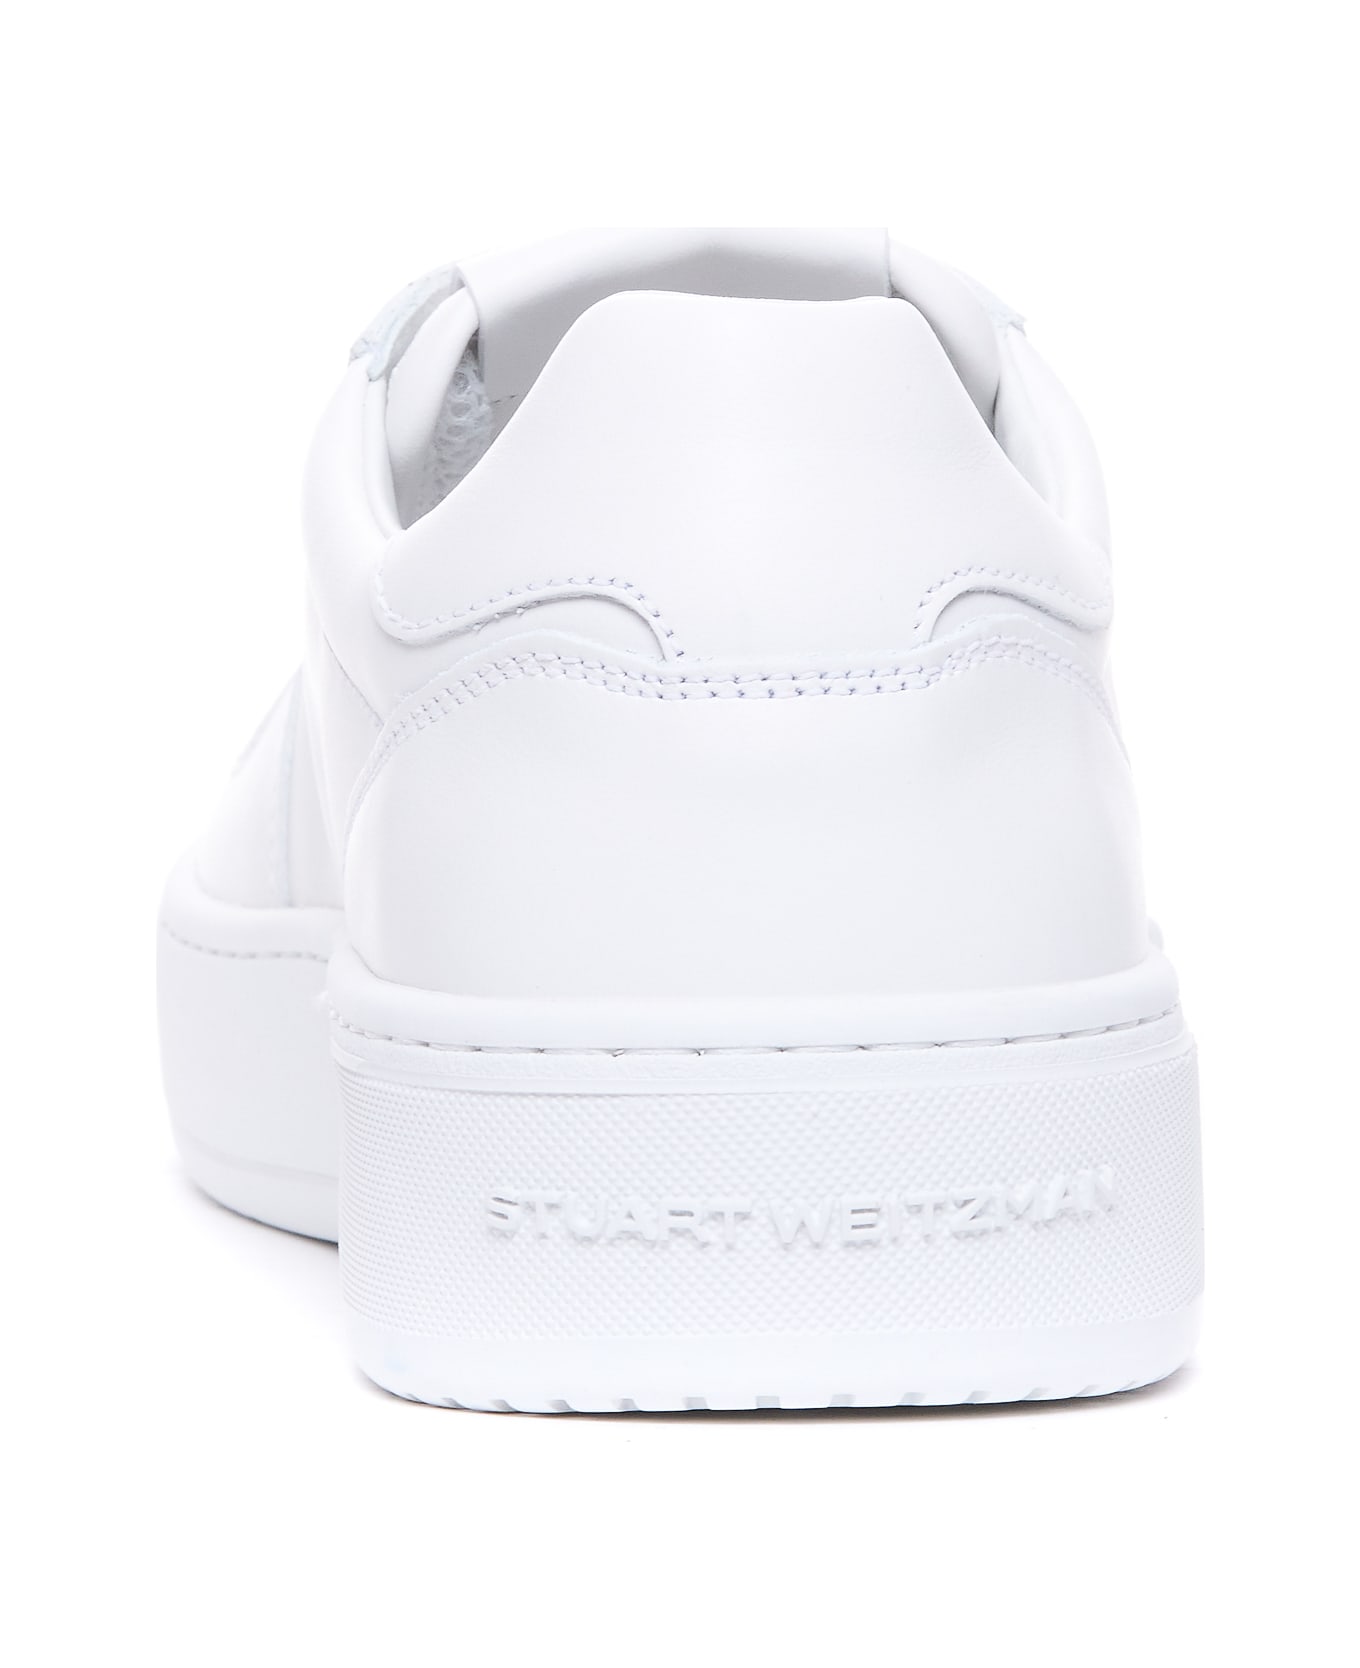 Stuart Weitzman Sw Courtside Monogram Sneakers - White